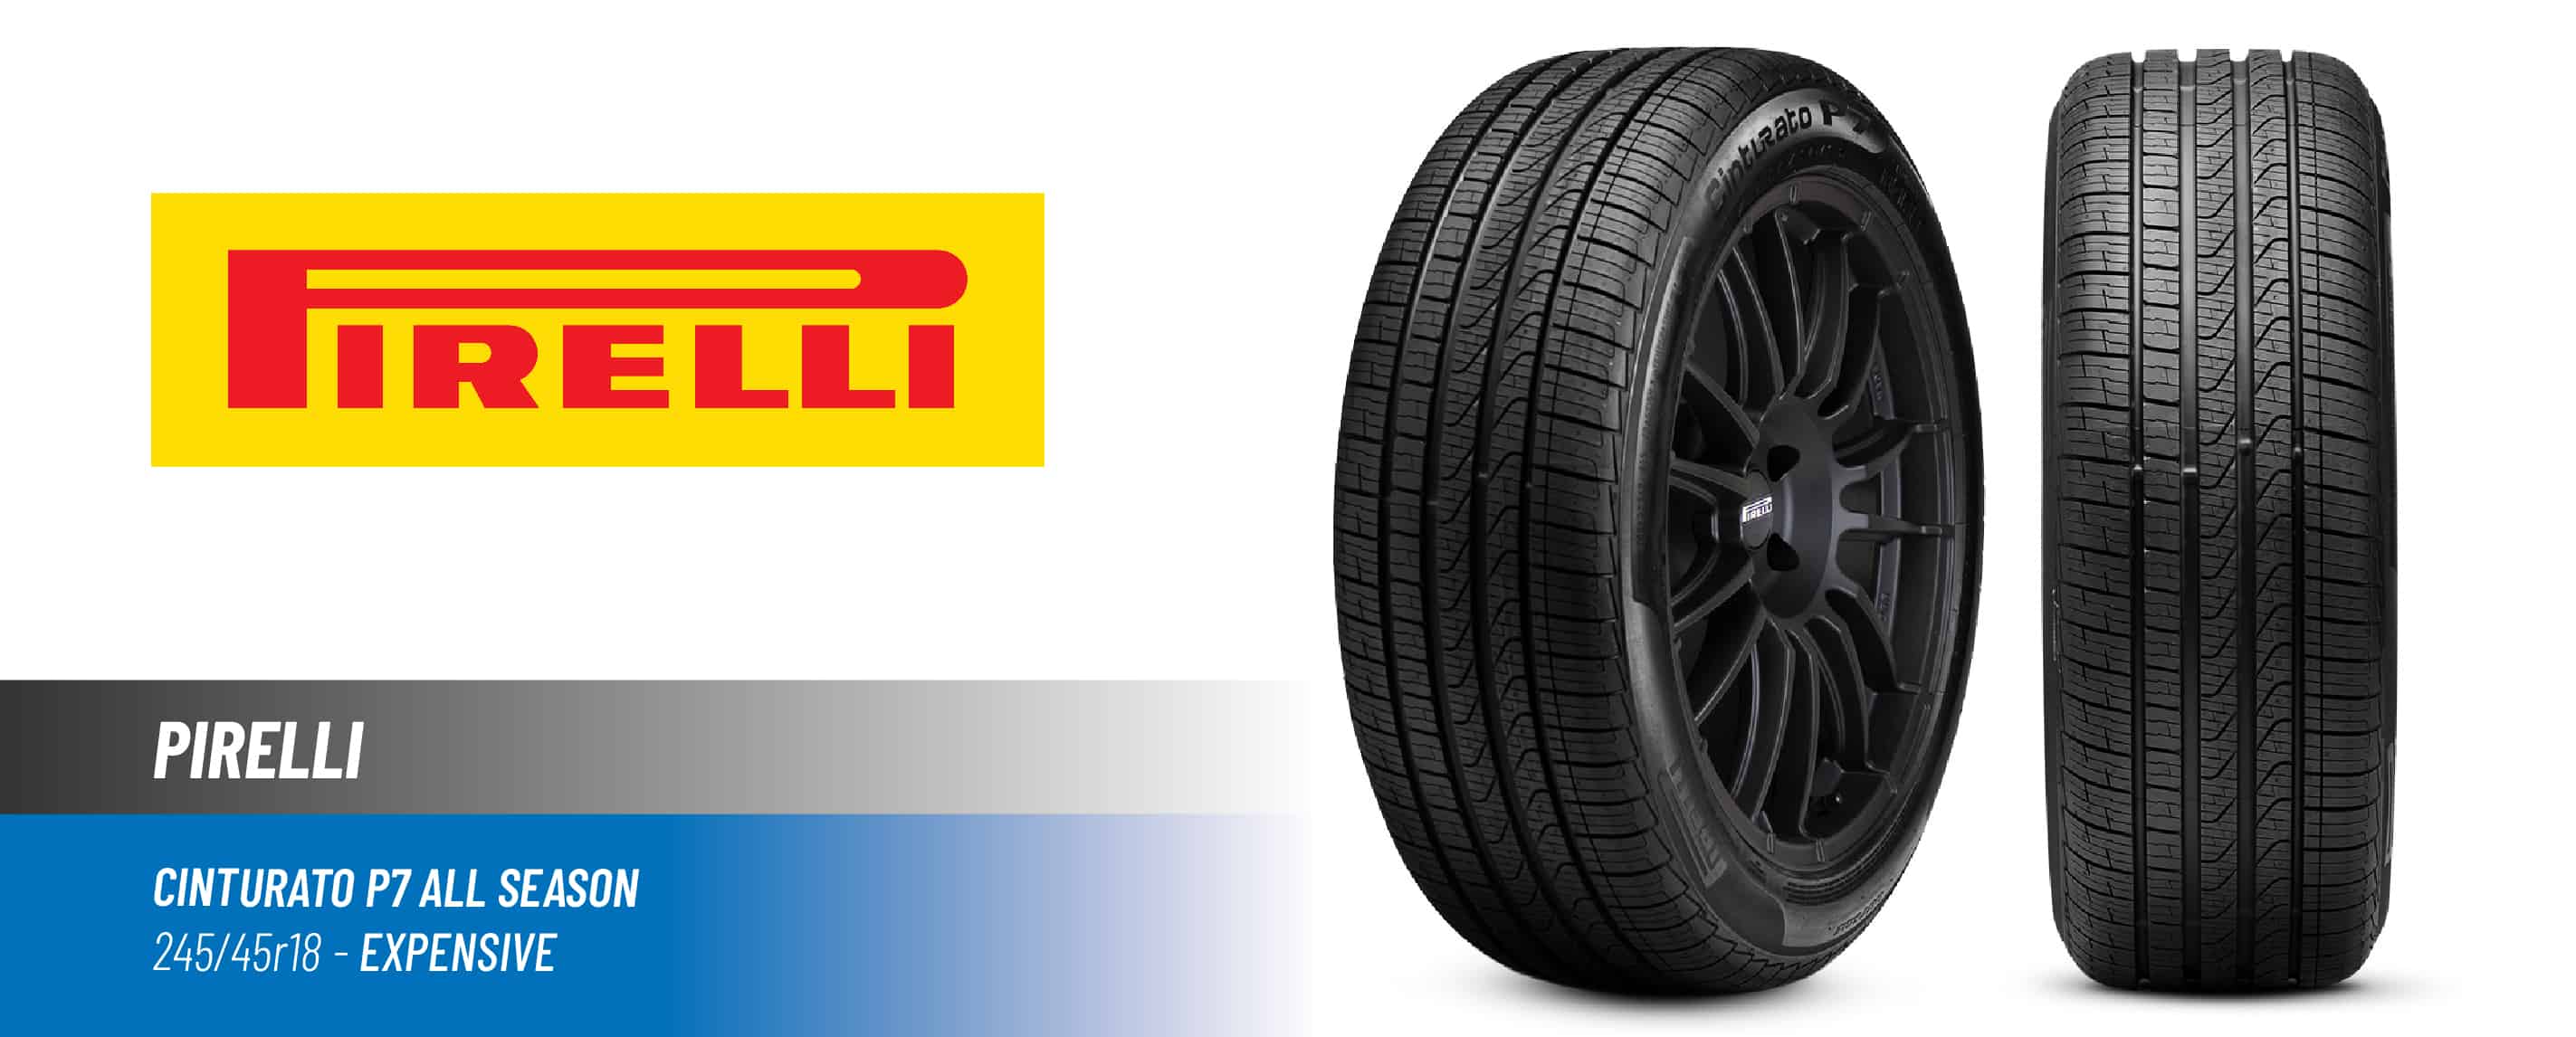 Top#5 High Price: Pirelli Cinturato P7 All Season – 245 45 r18